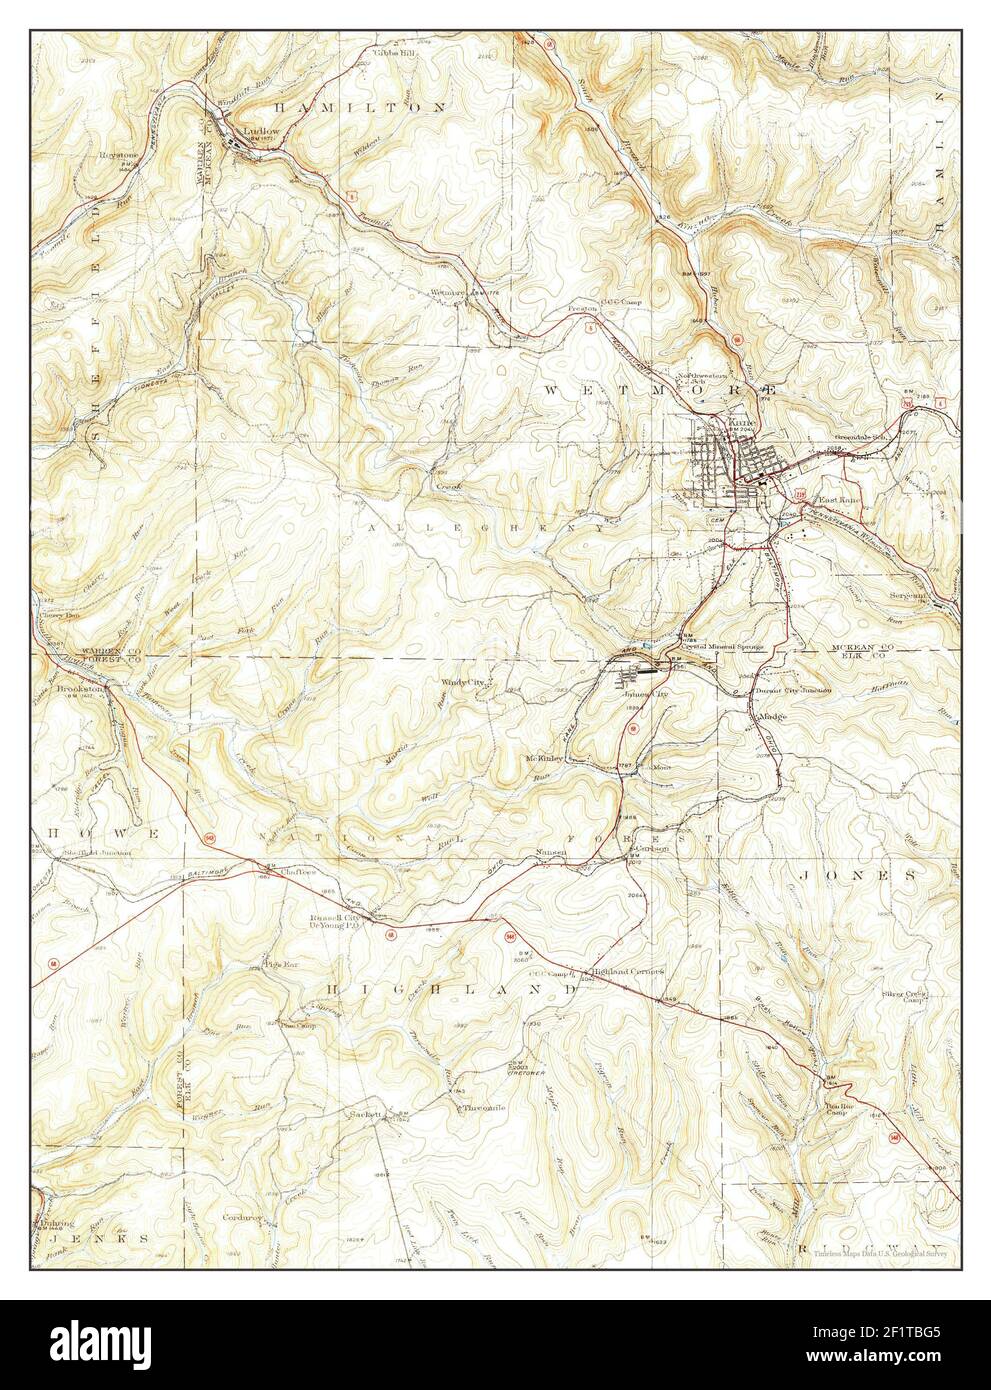 Kane, Pennsylvania, map 1939, 1:62500, United States of America by Timeless Maps, data U.S. Geological Survey Stock Photo